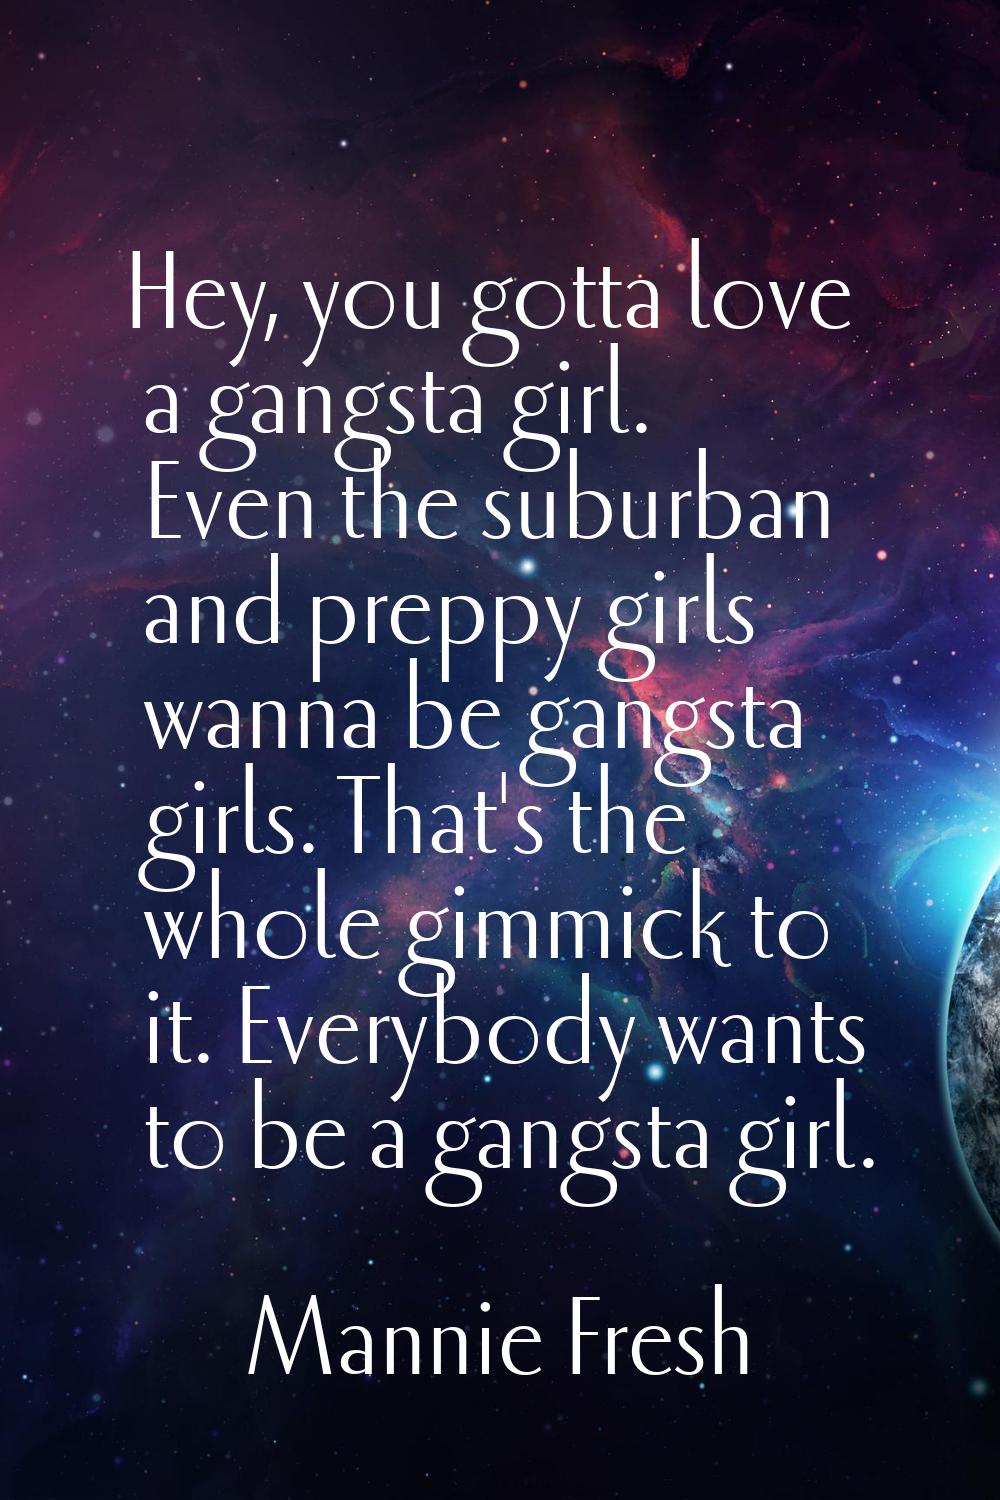 Hey, you gotta love a gangsta girl. Even the suburban and preppy girls wanna be gangsta girls. That